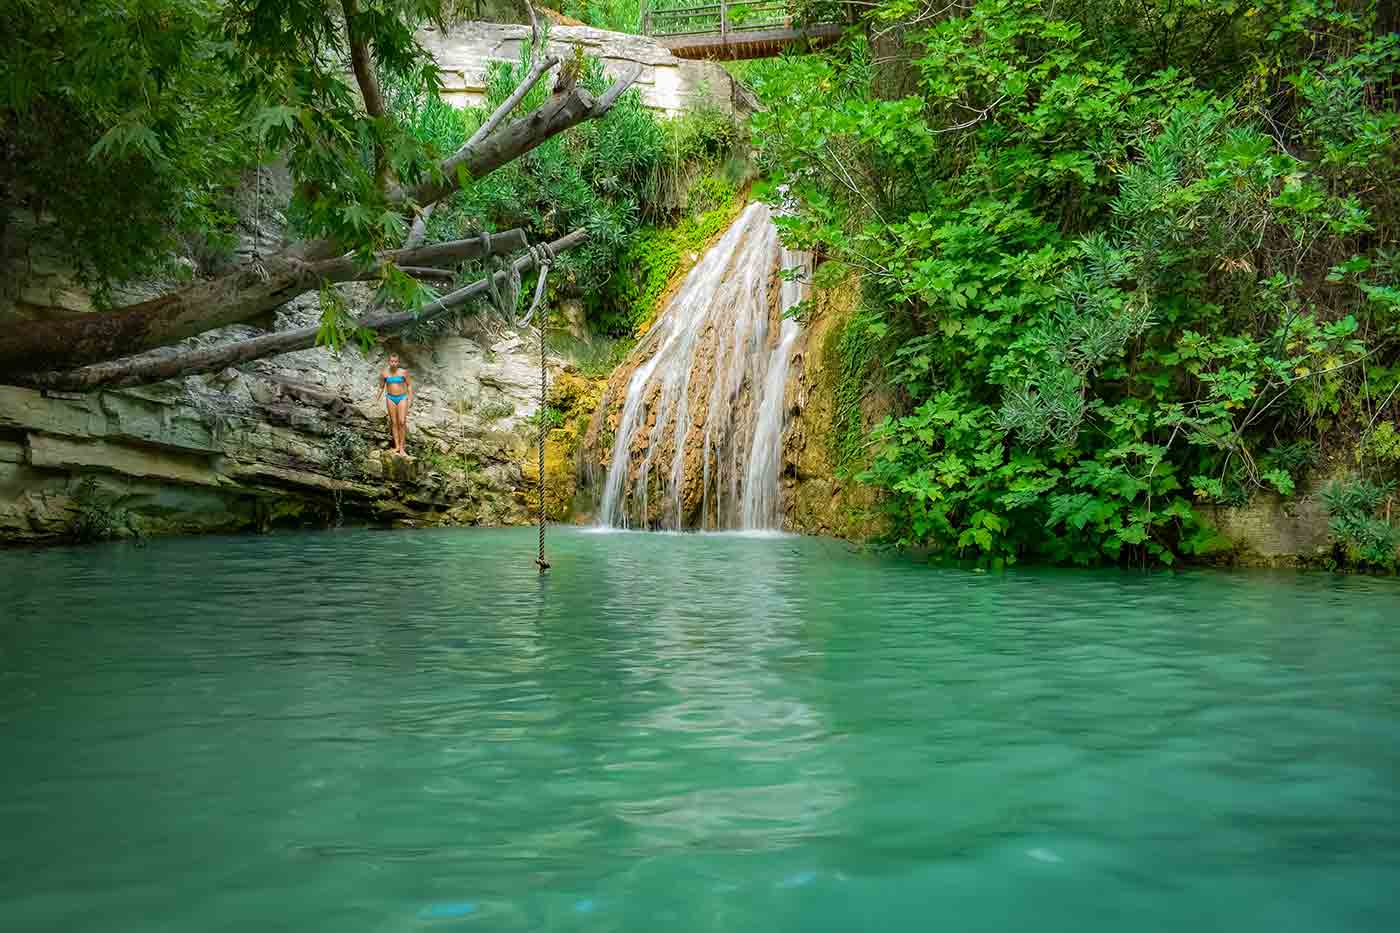 Adonis Baths Waterfalls